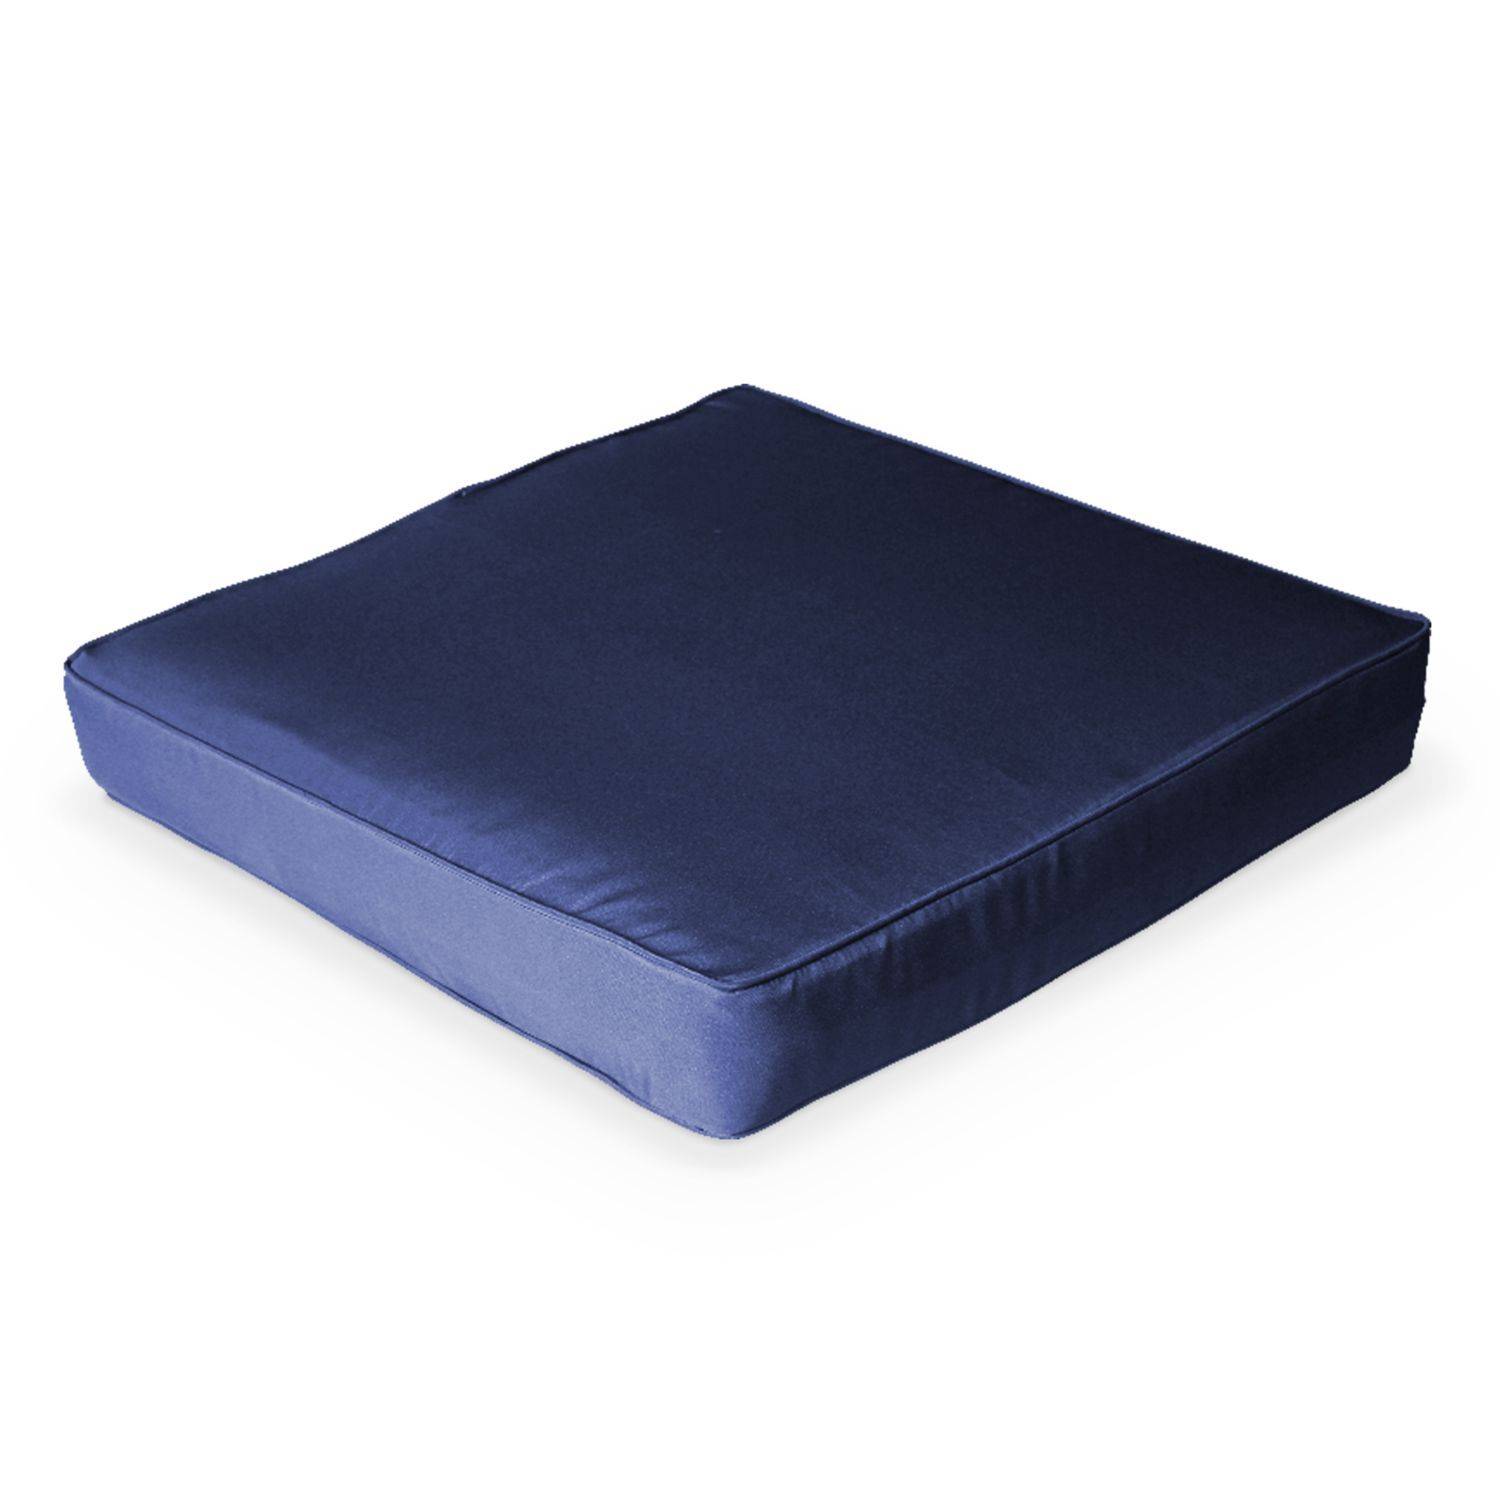 Blue cushion cover set for Napoli garden set - complete set Photo3